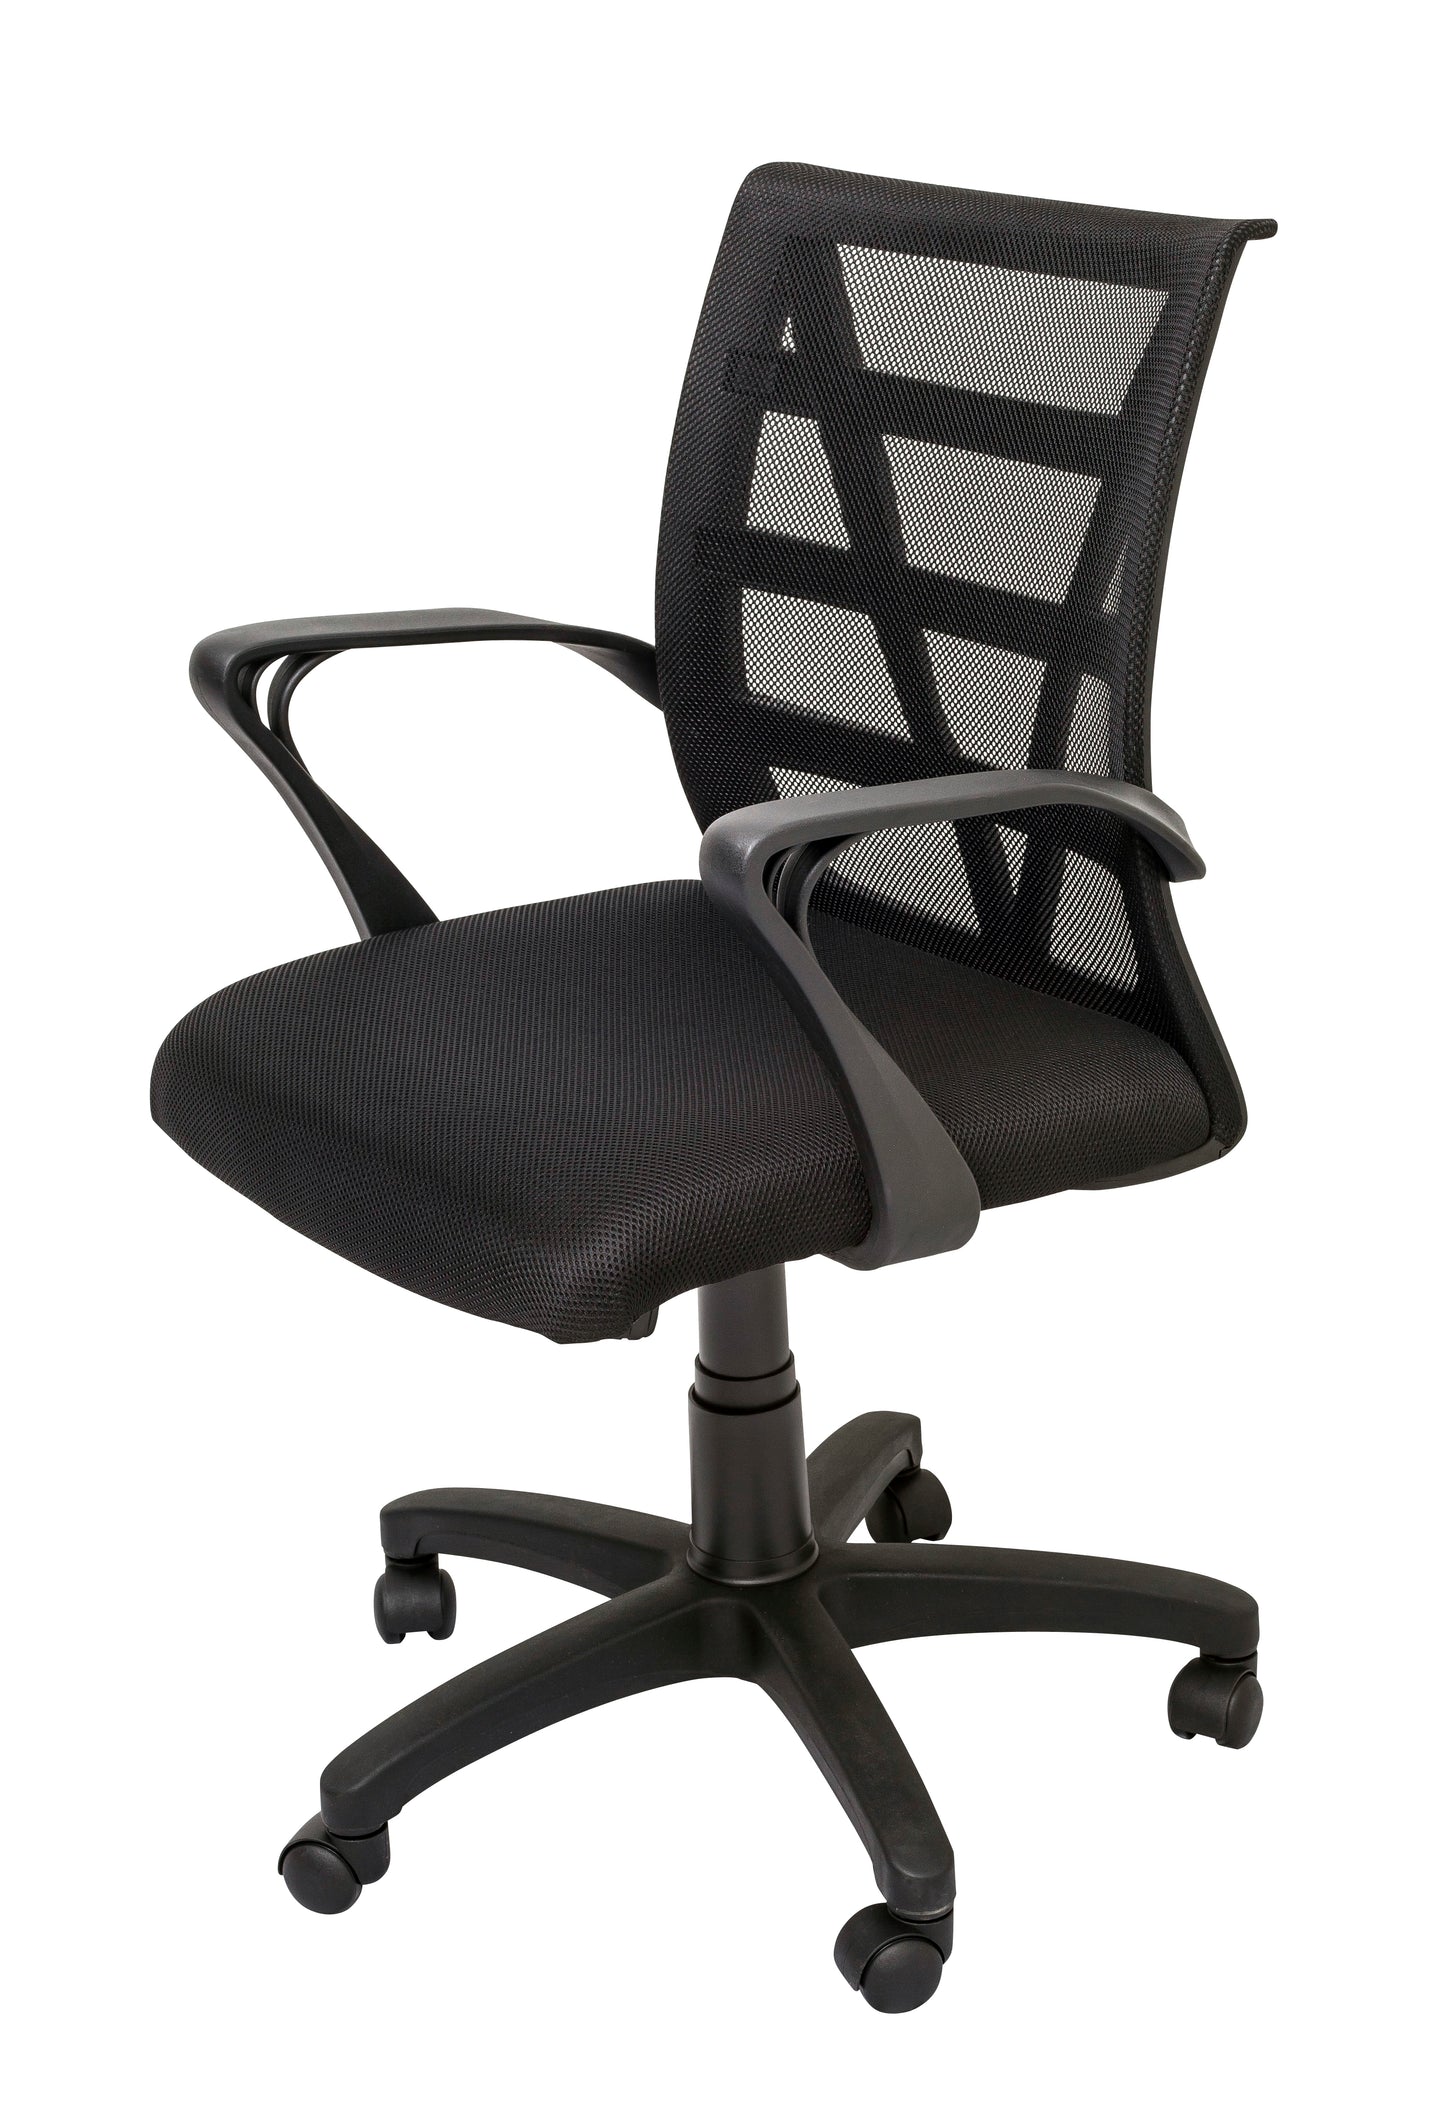 ErgoHome CL Office Chair - Black